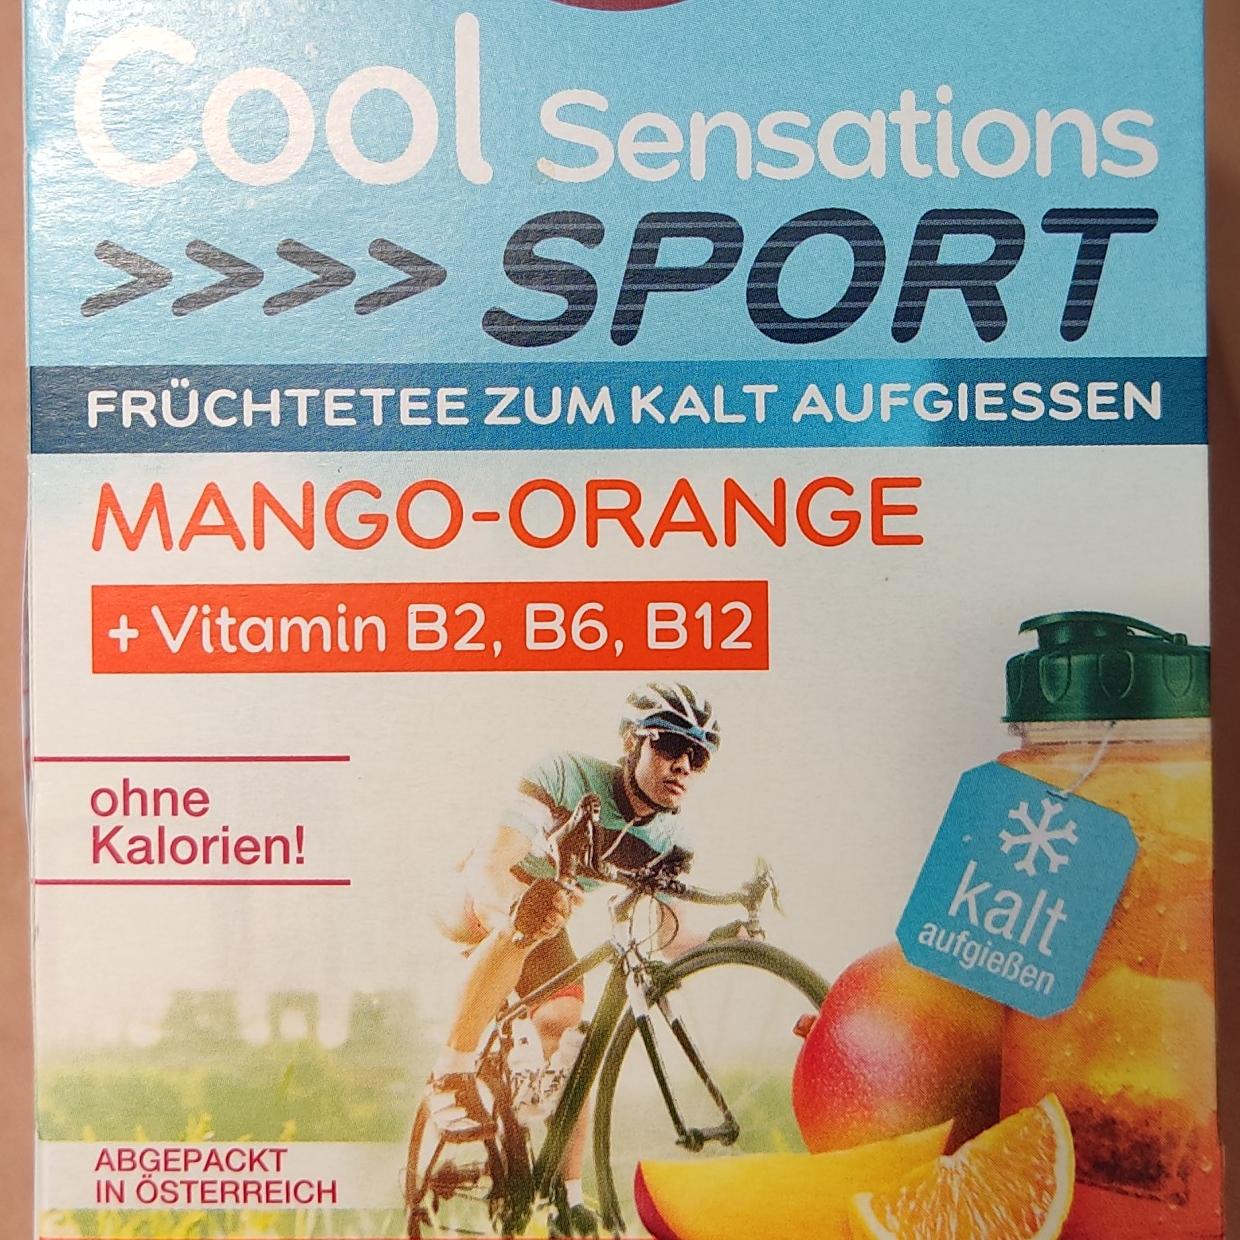 Fotografie - Cool Sensation Sport Mango-Orange Teekanne